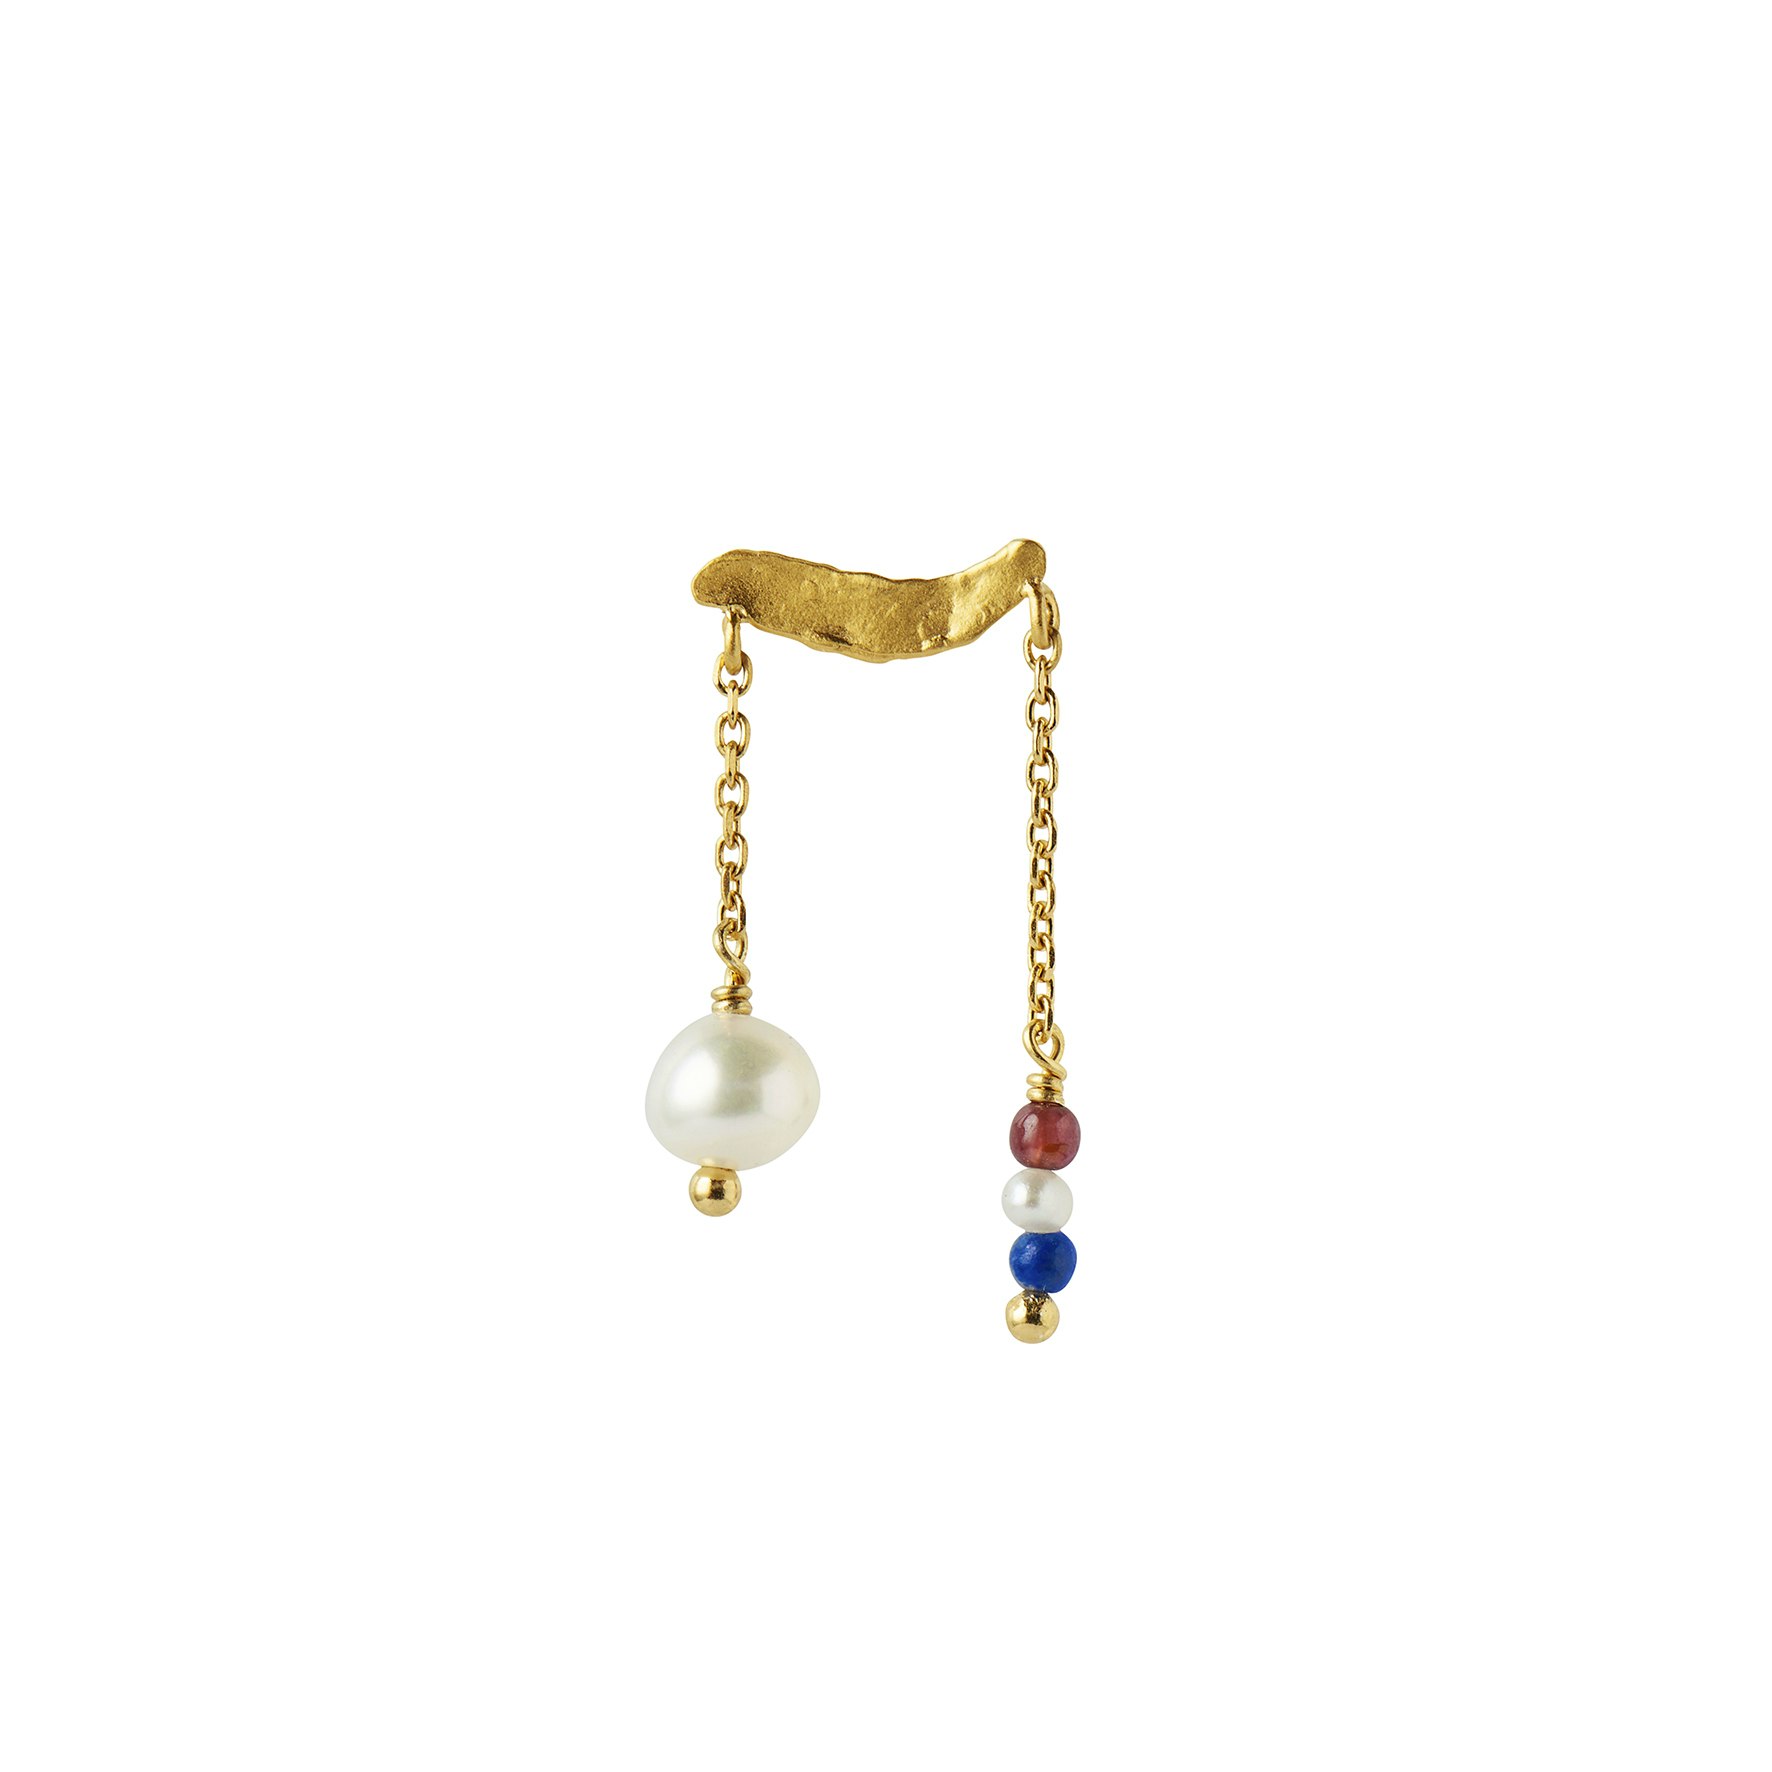 Petit Gold Splash Earring Chains & French Kiss fra STINE A Jewelry i Forgylt-Sølv Sterling 925